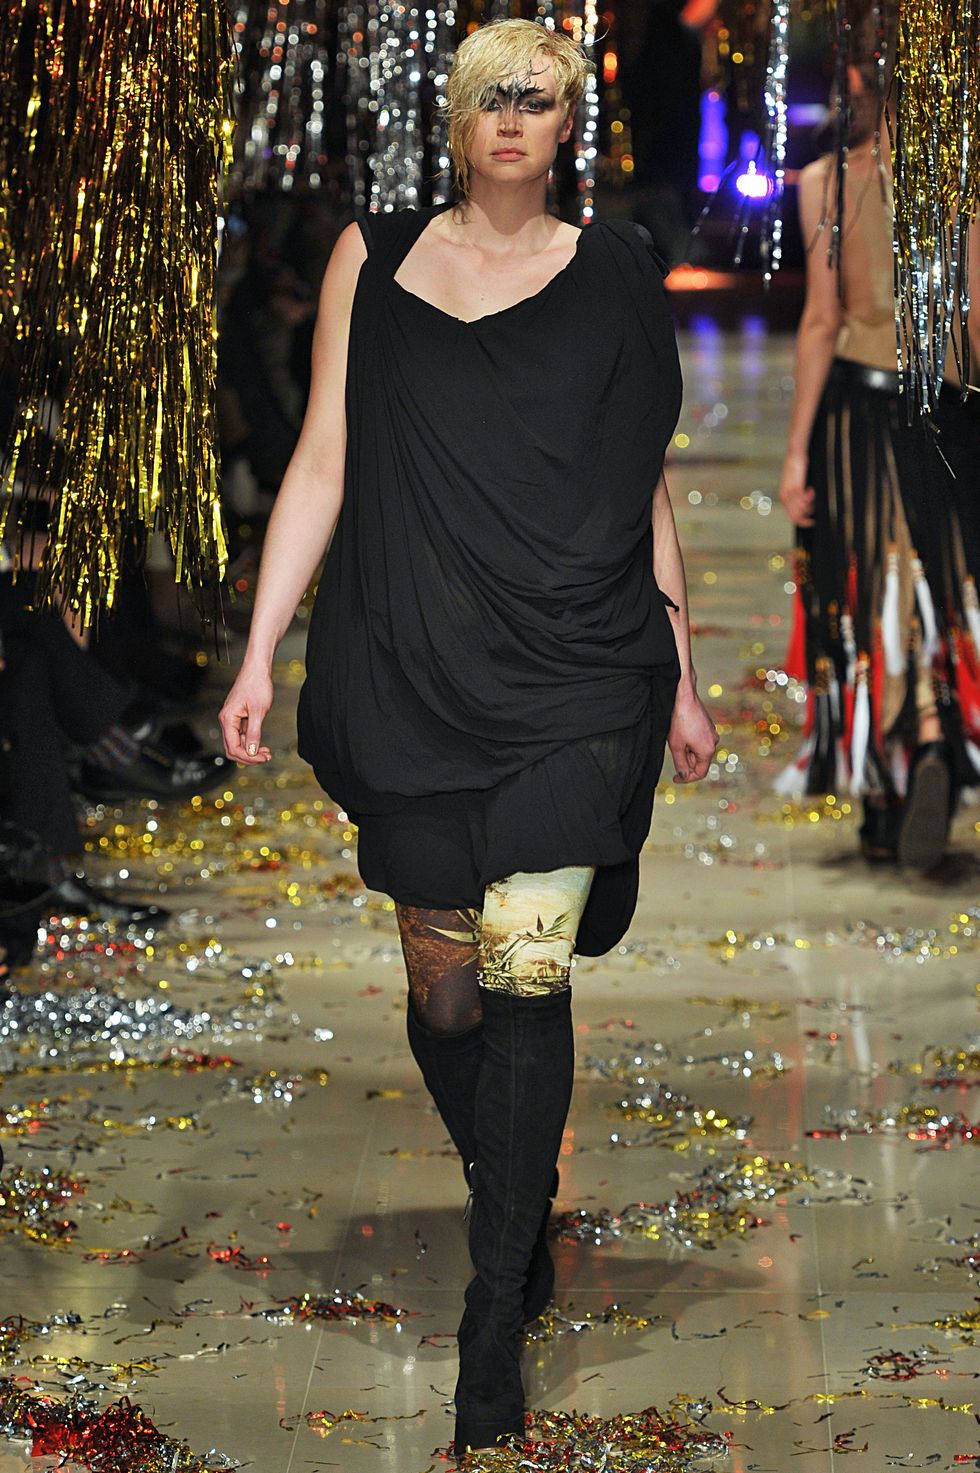 關朵琳克莉絲蒂 gwendoline christie於巴黎時裝週 vivienne westwood 20152016 秋冬大秀